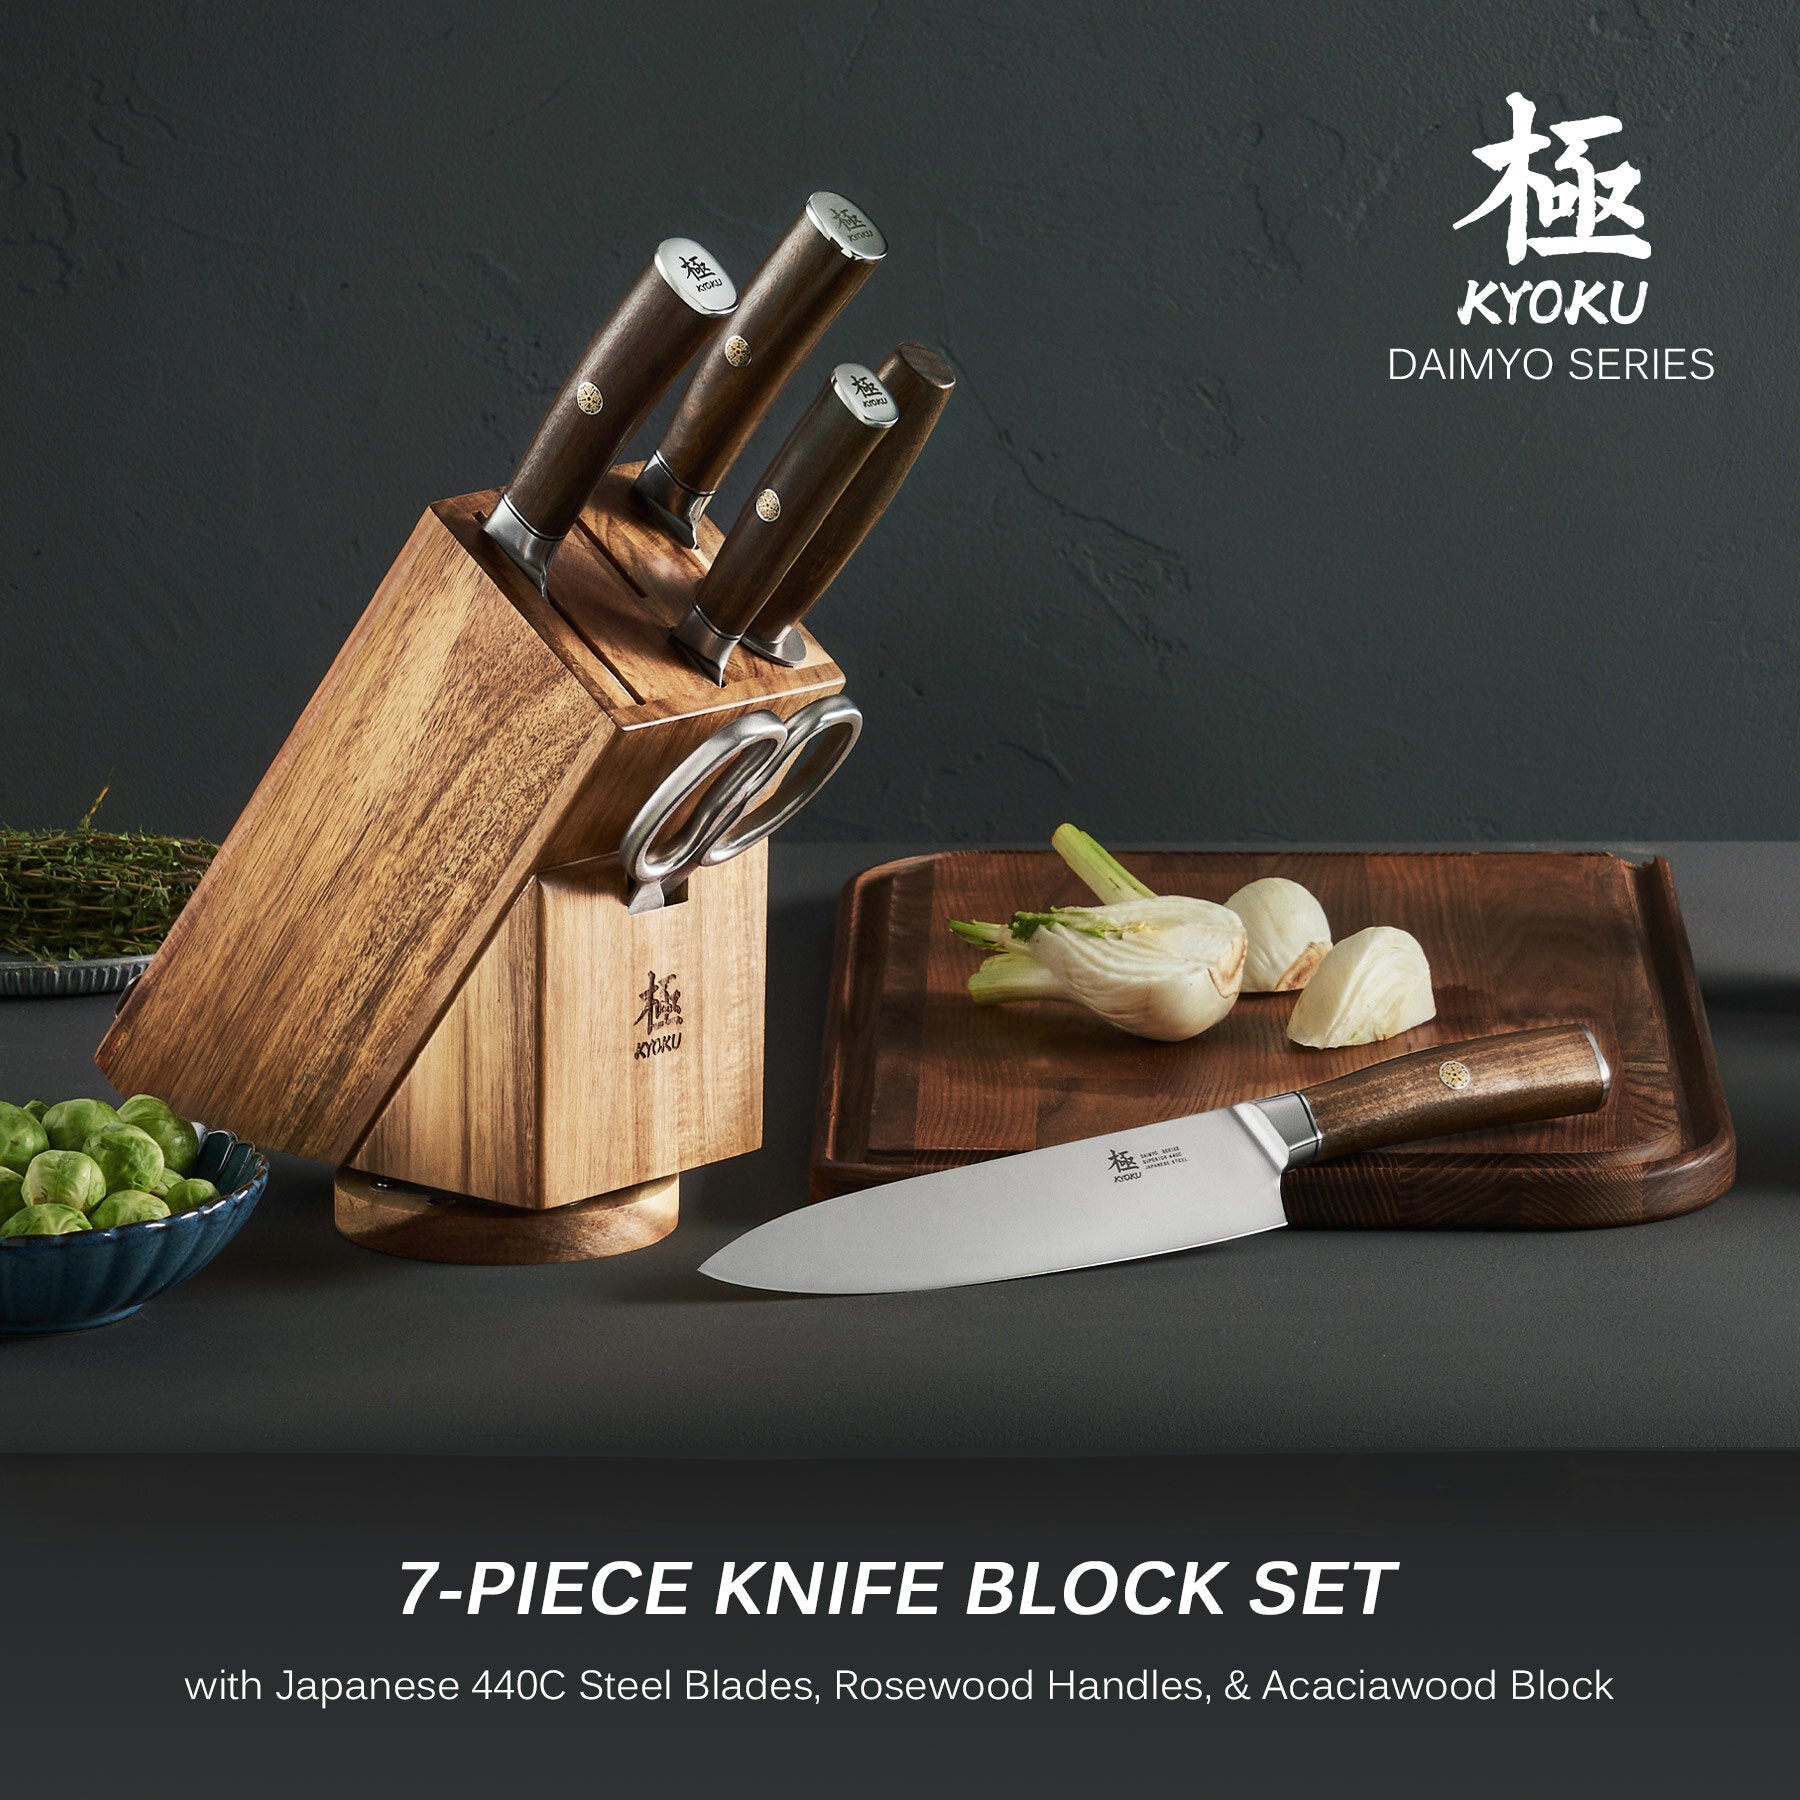 Cook Works 7-Piece Teal Blue Marble Knife Block Set